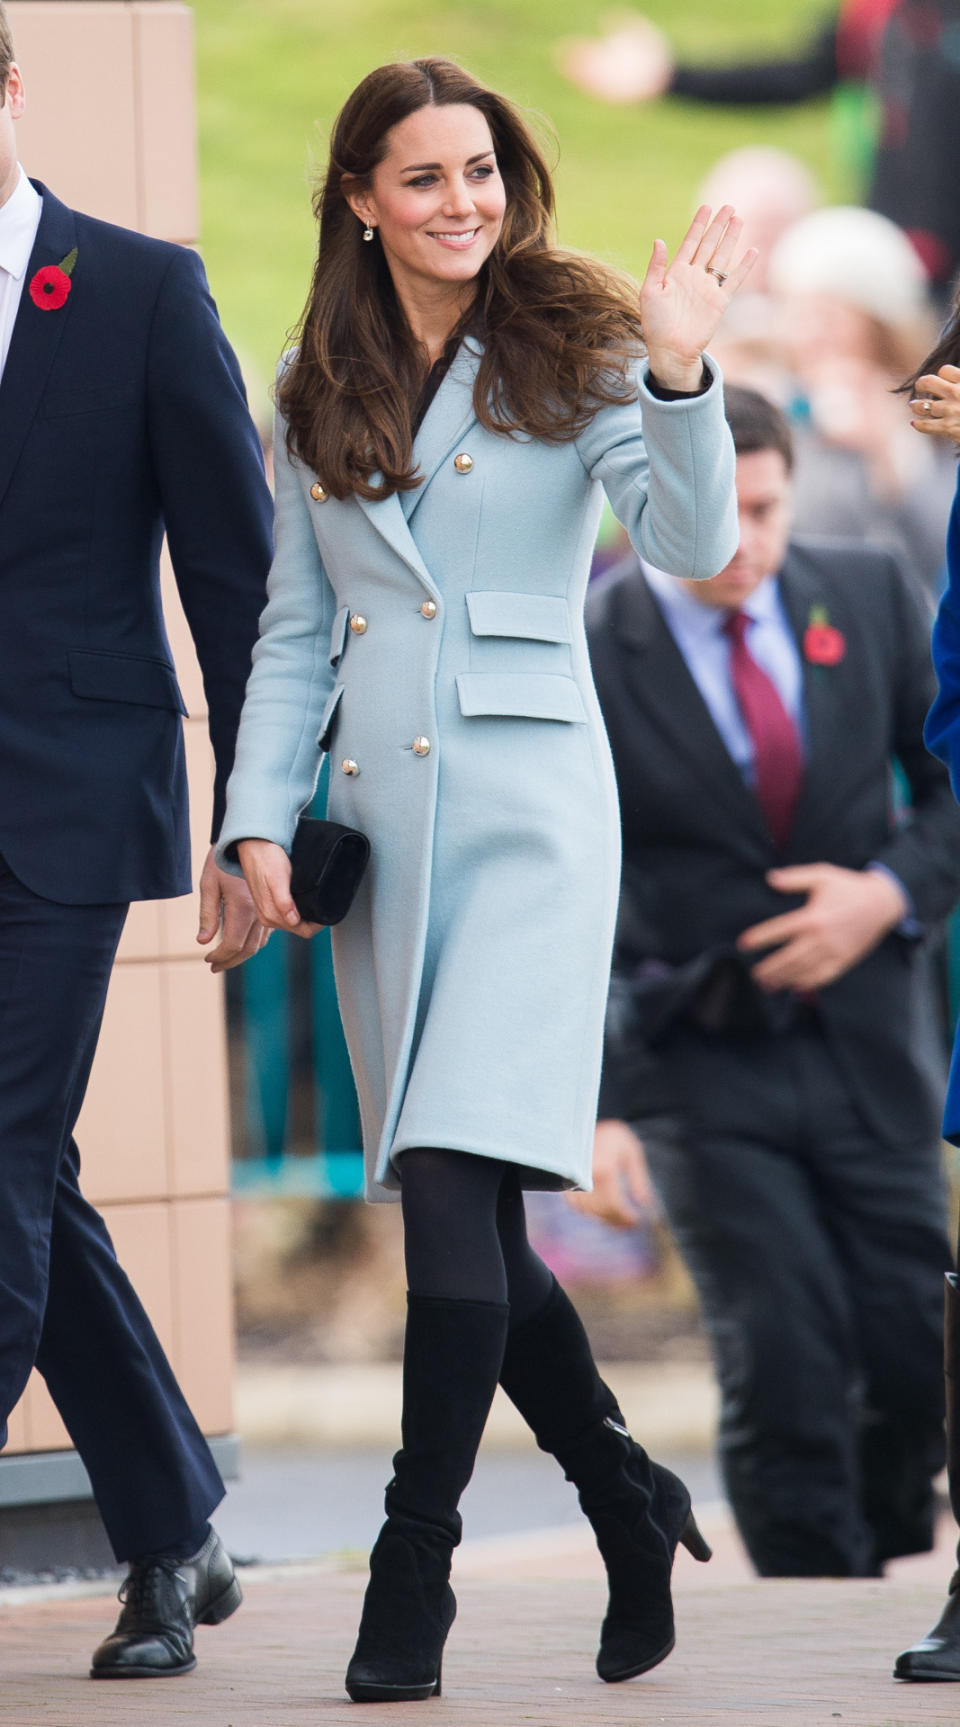 The Duchess of Cambridge wore a powder blue coat by British designer Matthew Williamson on a visit to Pembroke Refinery.